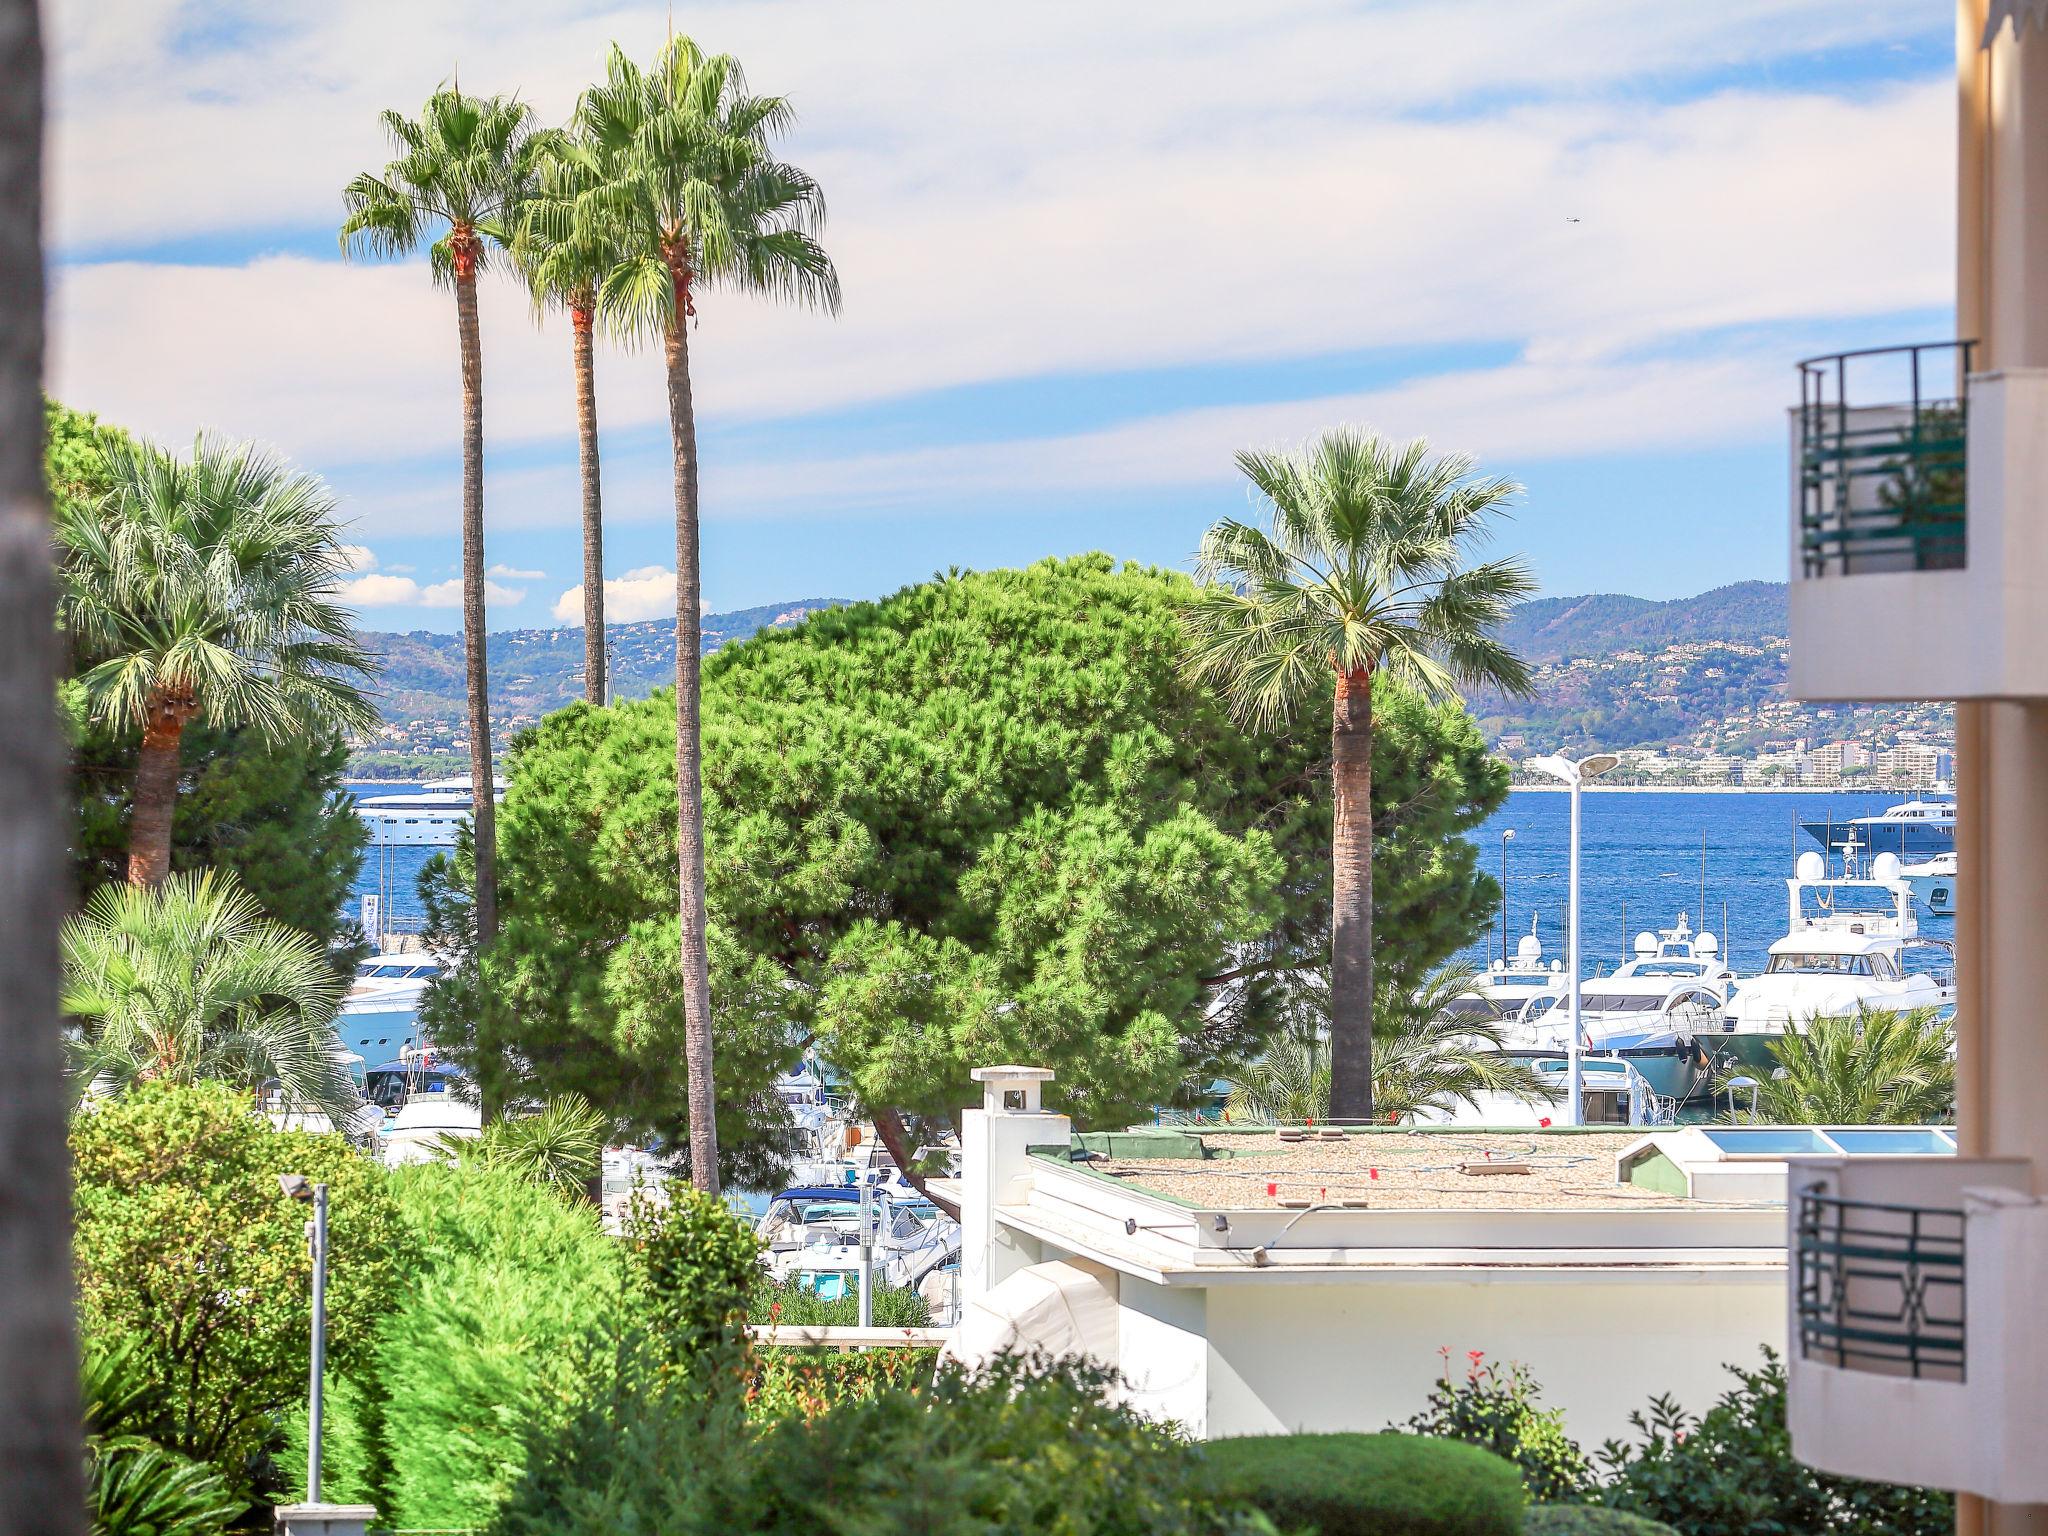 Foto 2 - Apartment in Cannes mit blick aufs meer